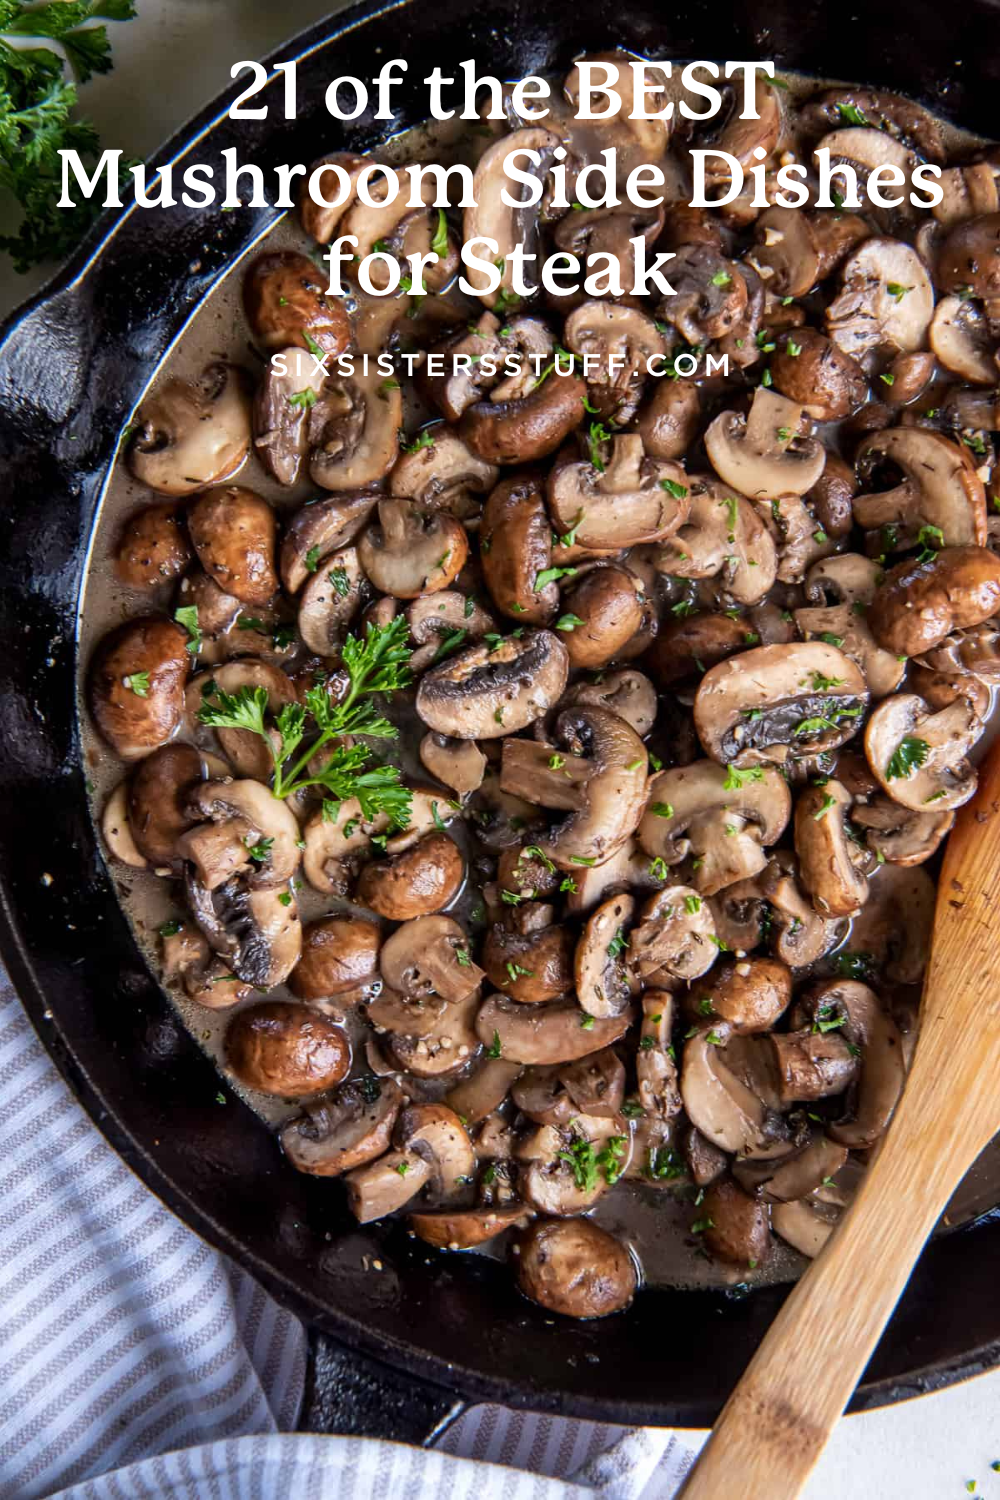 21 of the BEST Mushroom Side Dishes for Steak